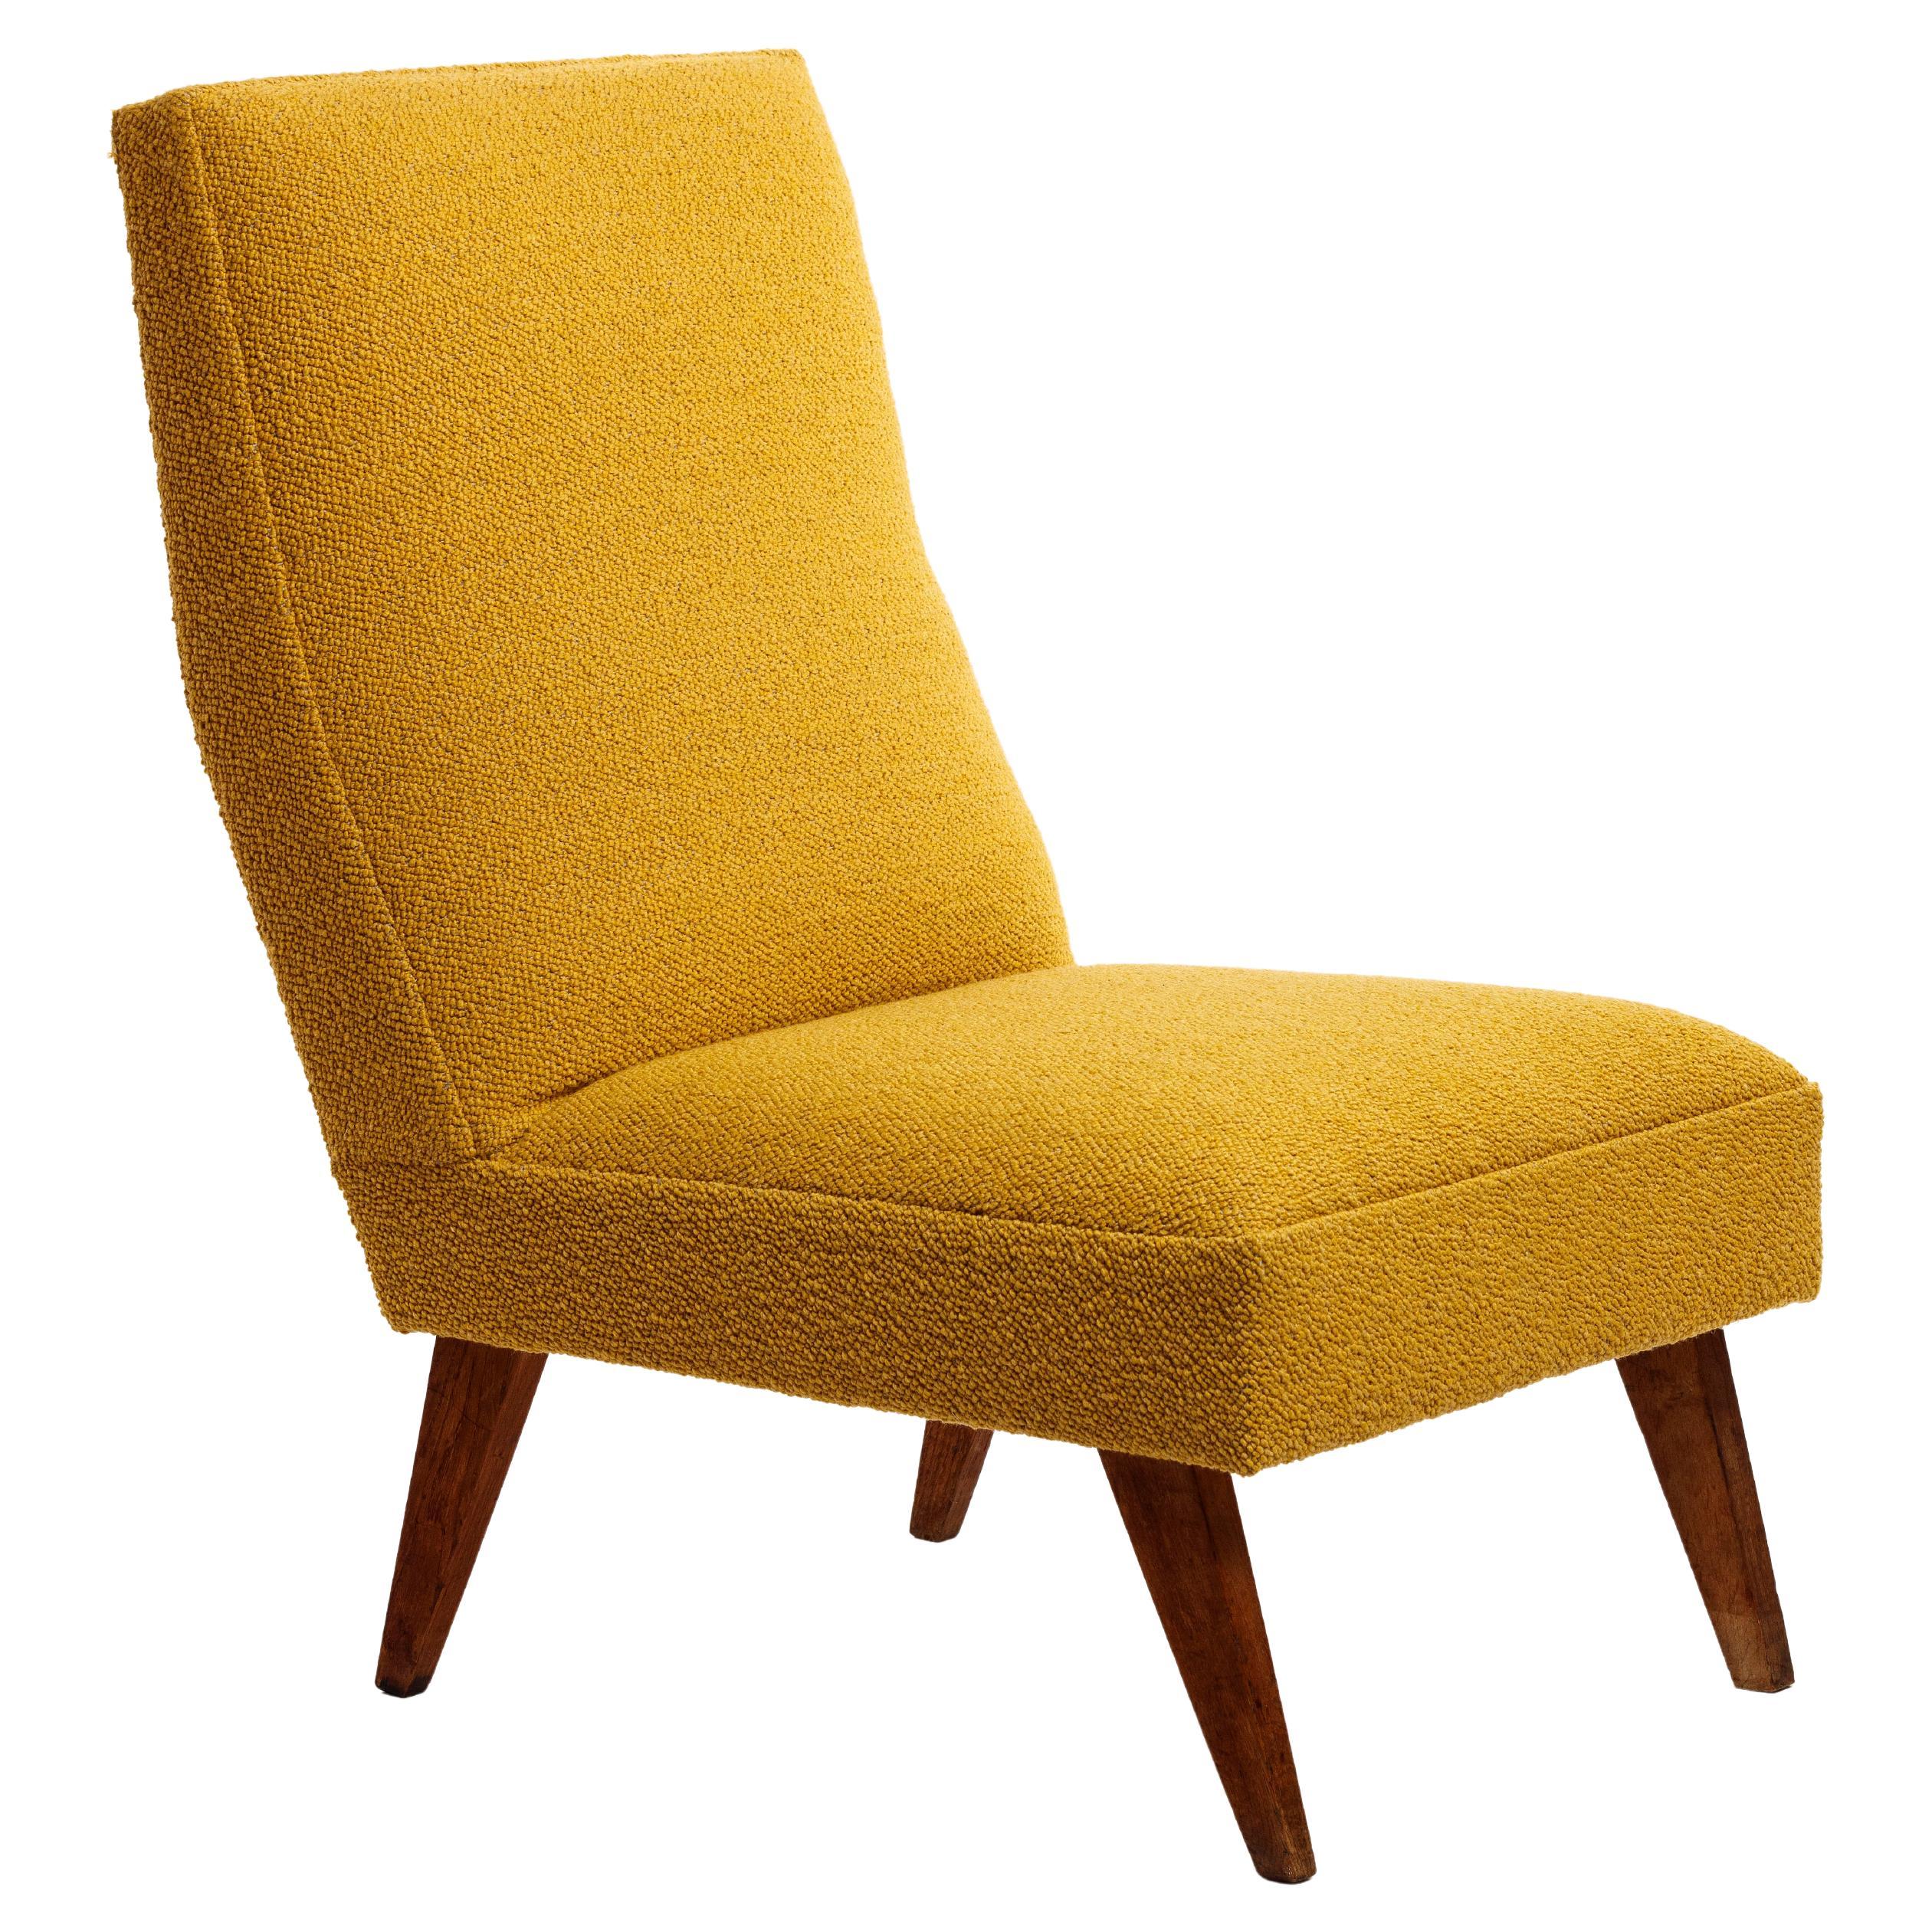 Emile Roset Yellow Lounge Chair Roset Editeur 1955 Antony university residence For Sale